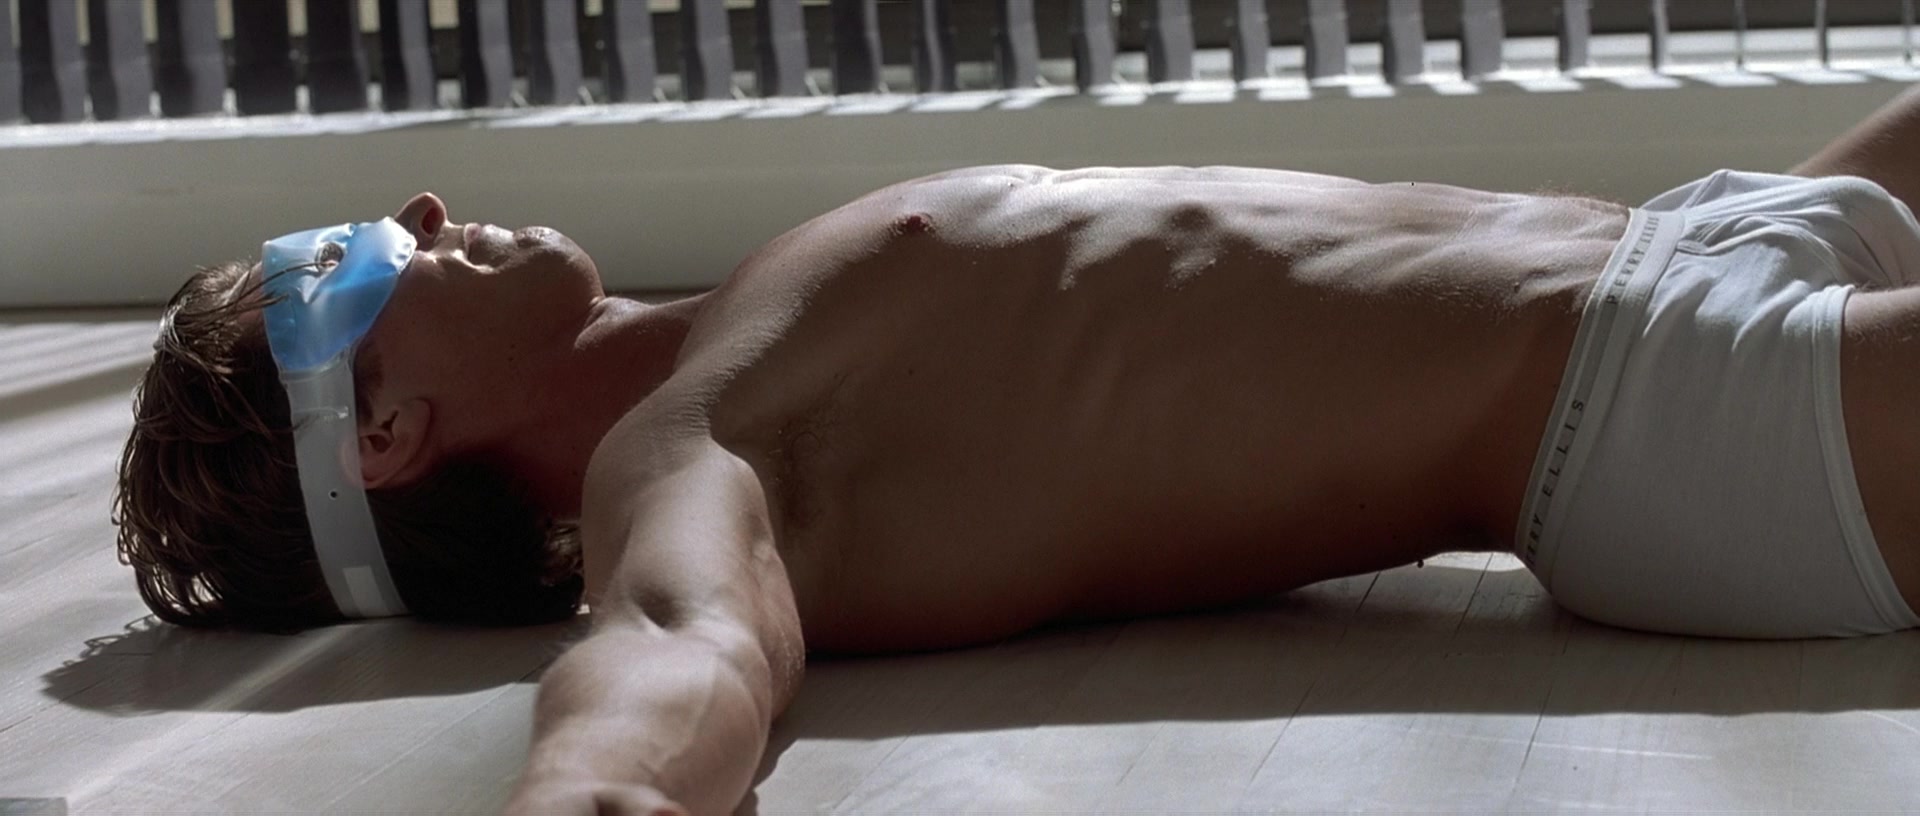 Perry Ellis White Underwear Worn by Christian Bale as Patrick Bateman in Am...